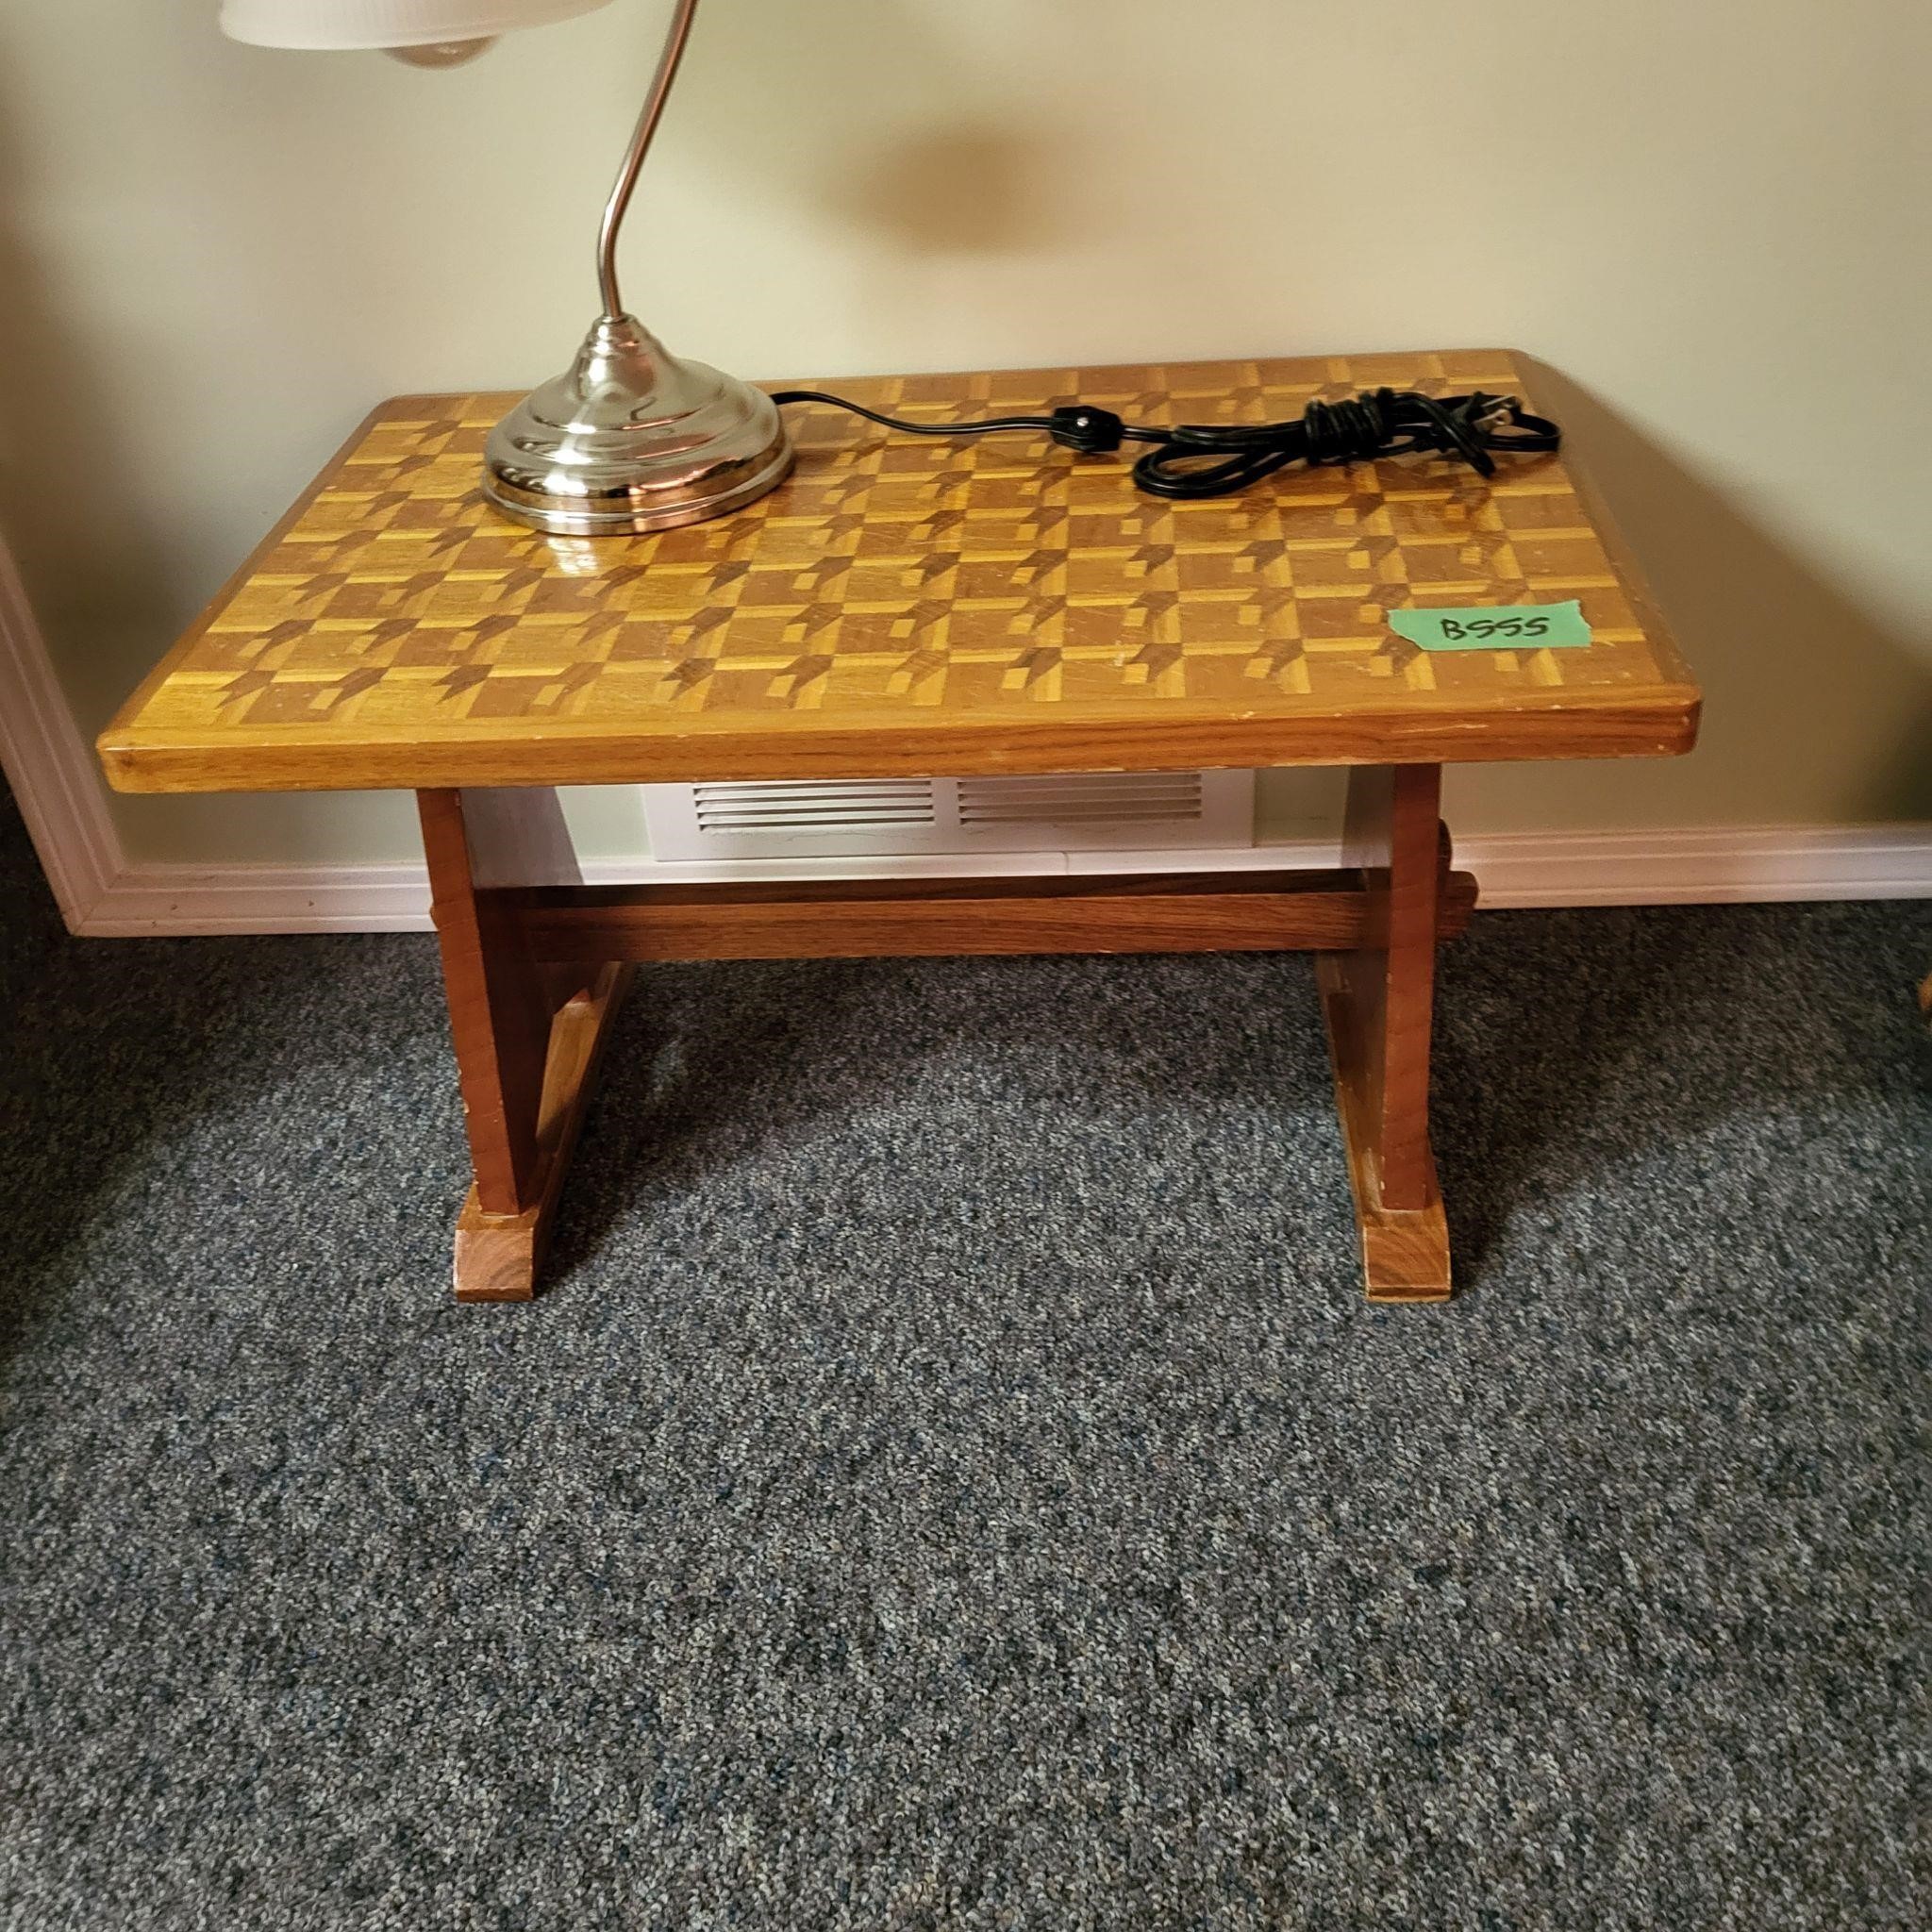 B555 Interesting Wood pattern side table